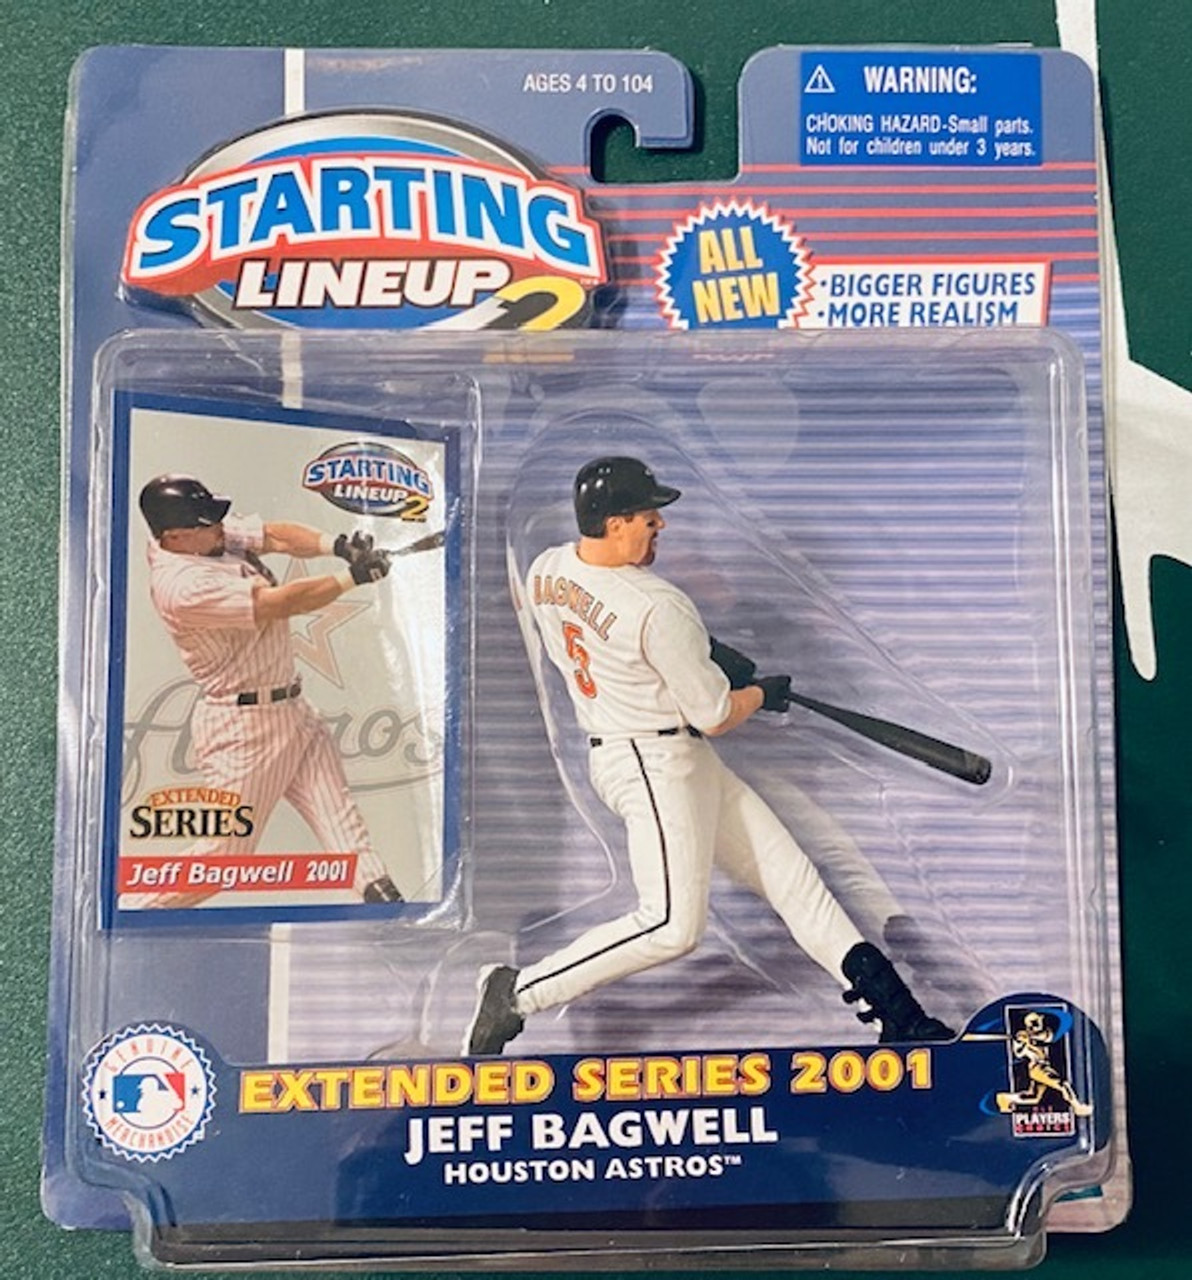 Jeff Bagwell Houston Astros 2001 Starting Lineup 2 Baseball Figure